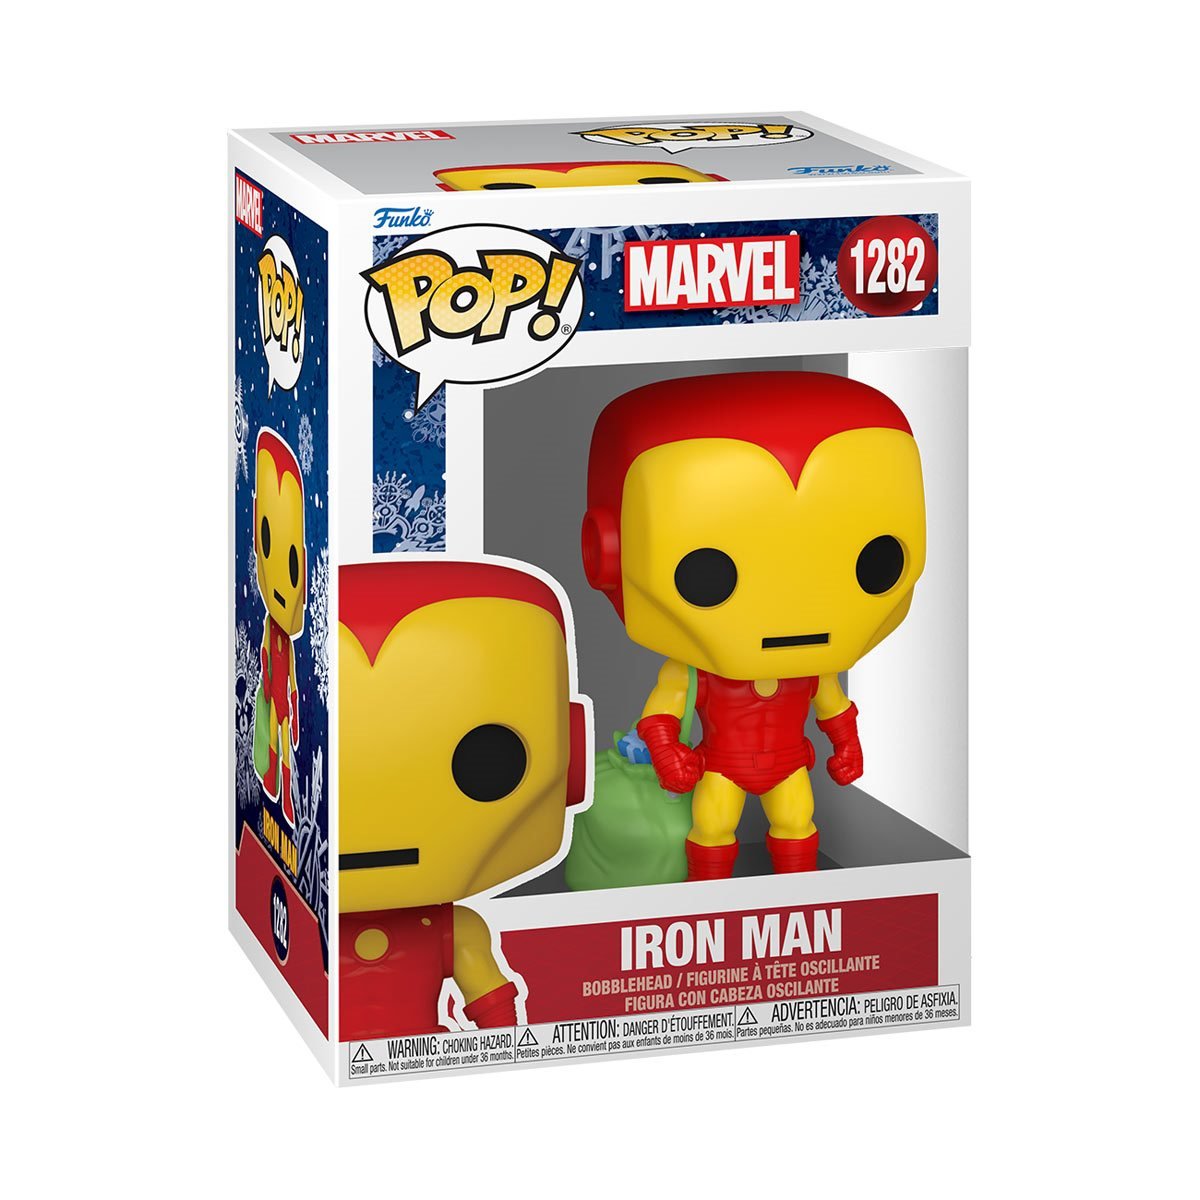 Funko PoP! Marvel Iron Man #1268 (Funko Special Edition)